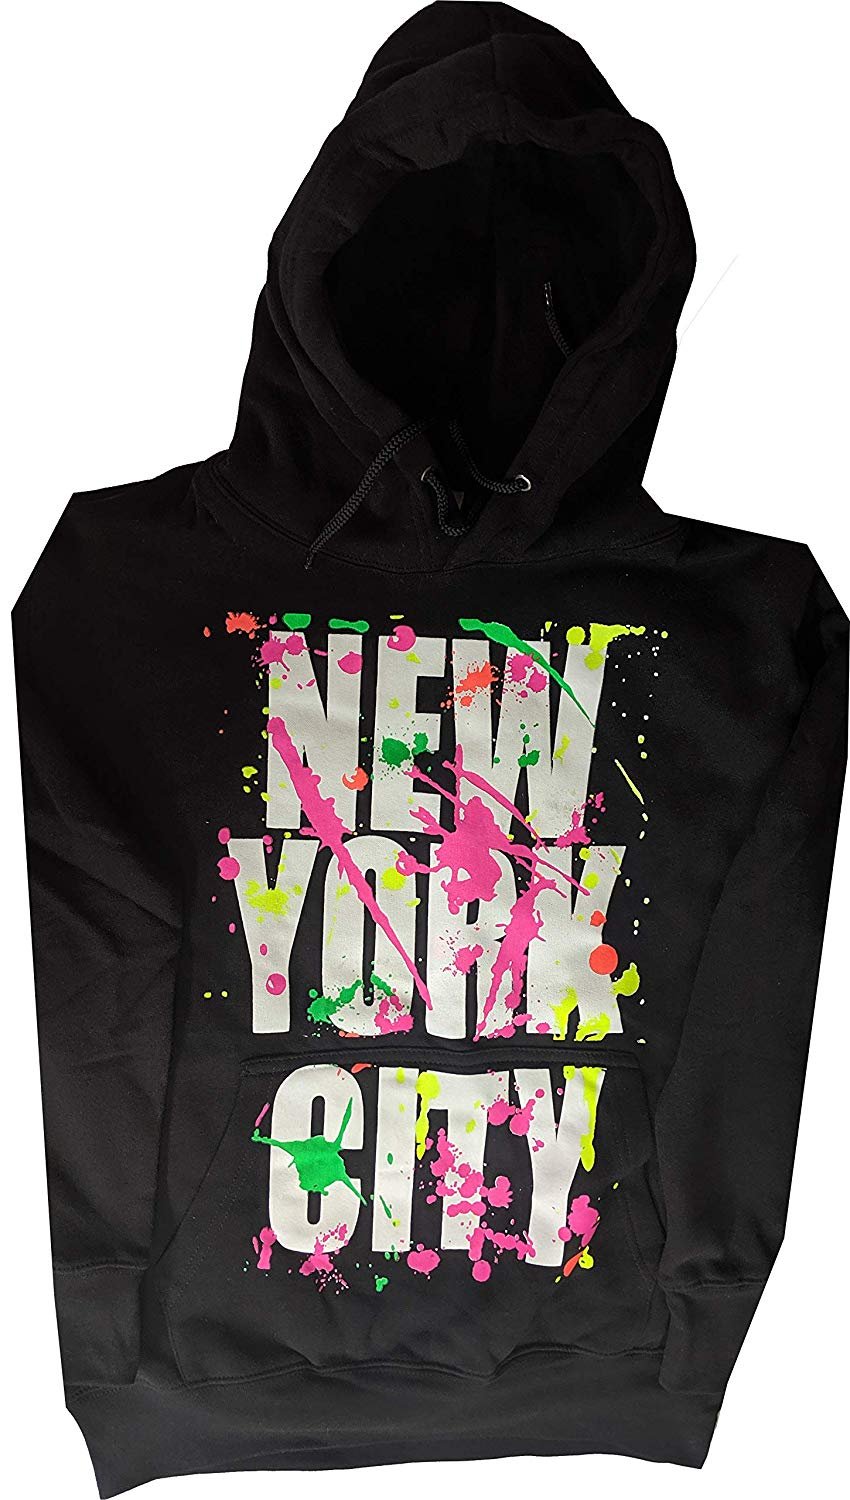 New York Paint Splash Hoodie Sweatshirt Adult Unisex Black